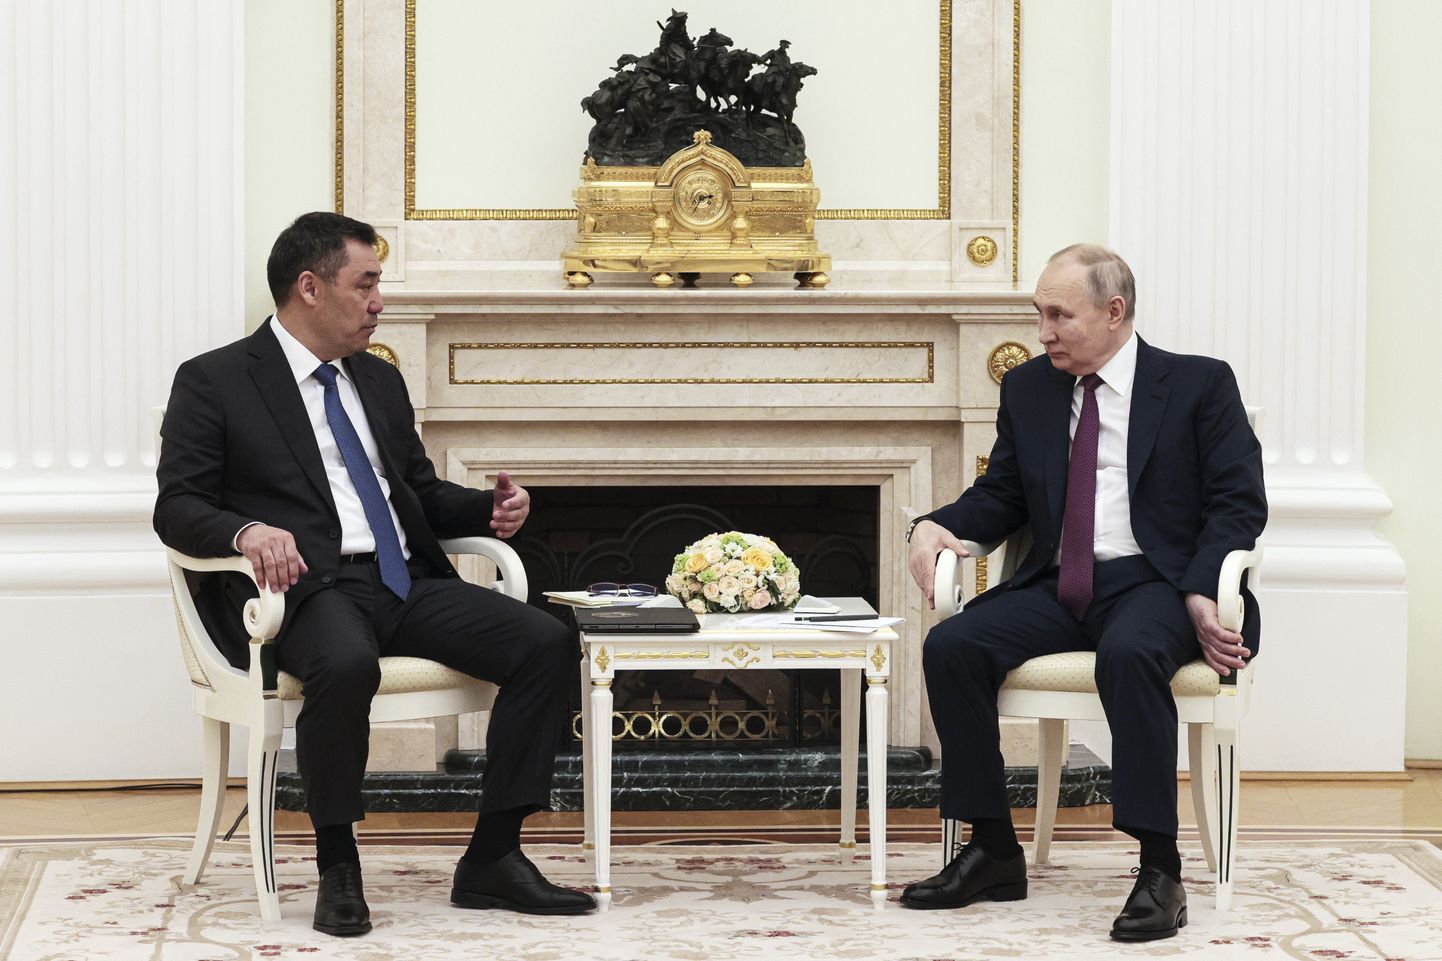 Kõrgõzstani president Sadõr Džaparov koos Venemaa presidendi Vladimir Putiniga